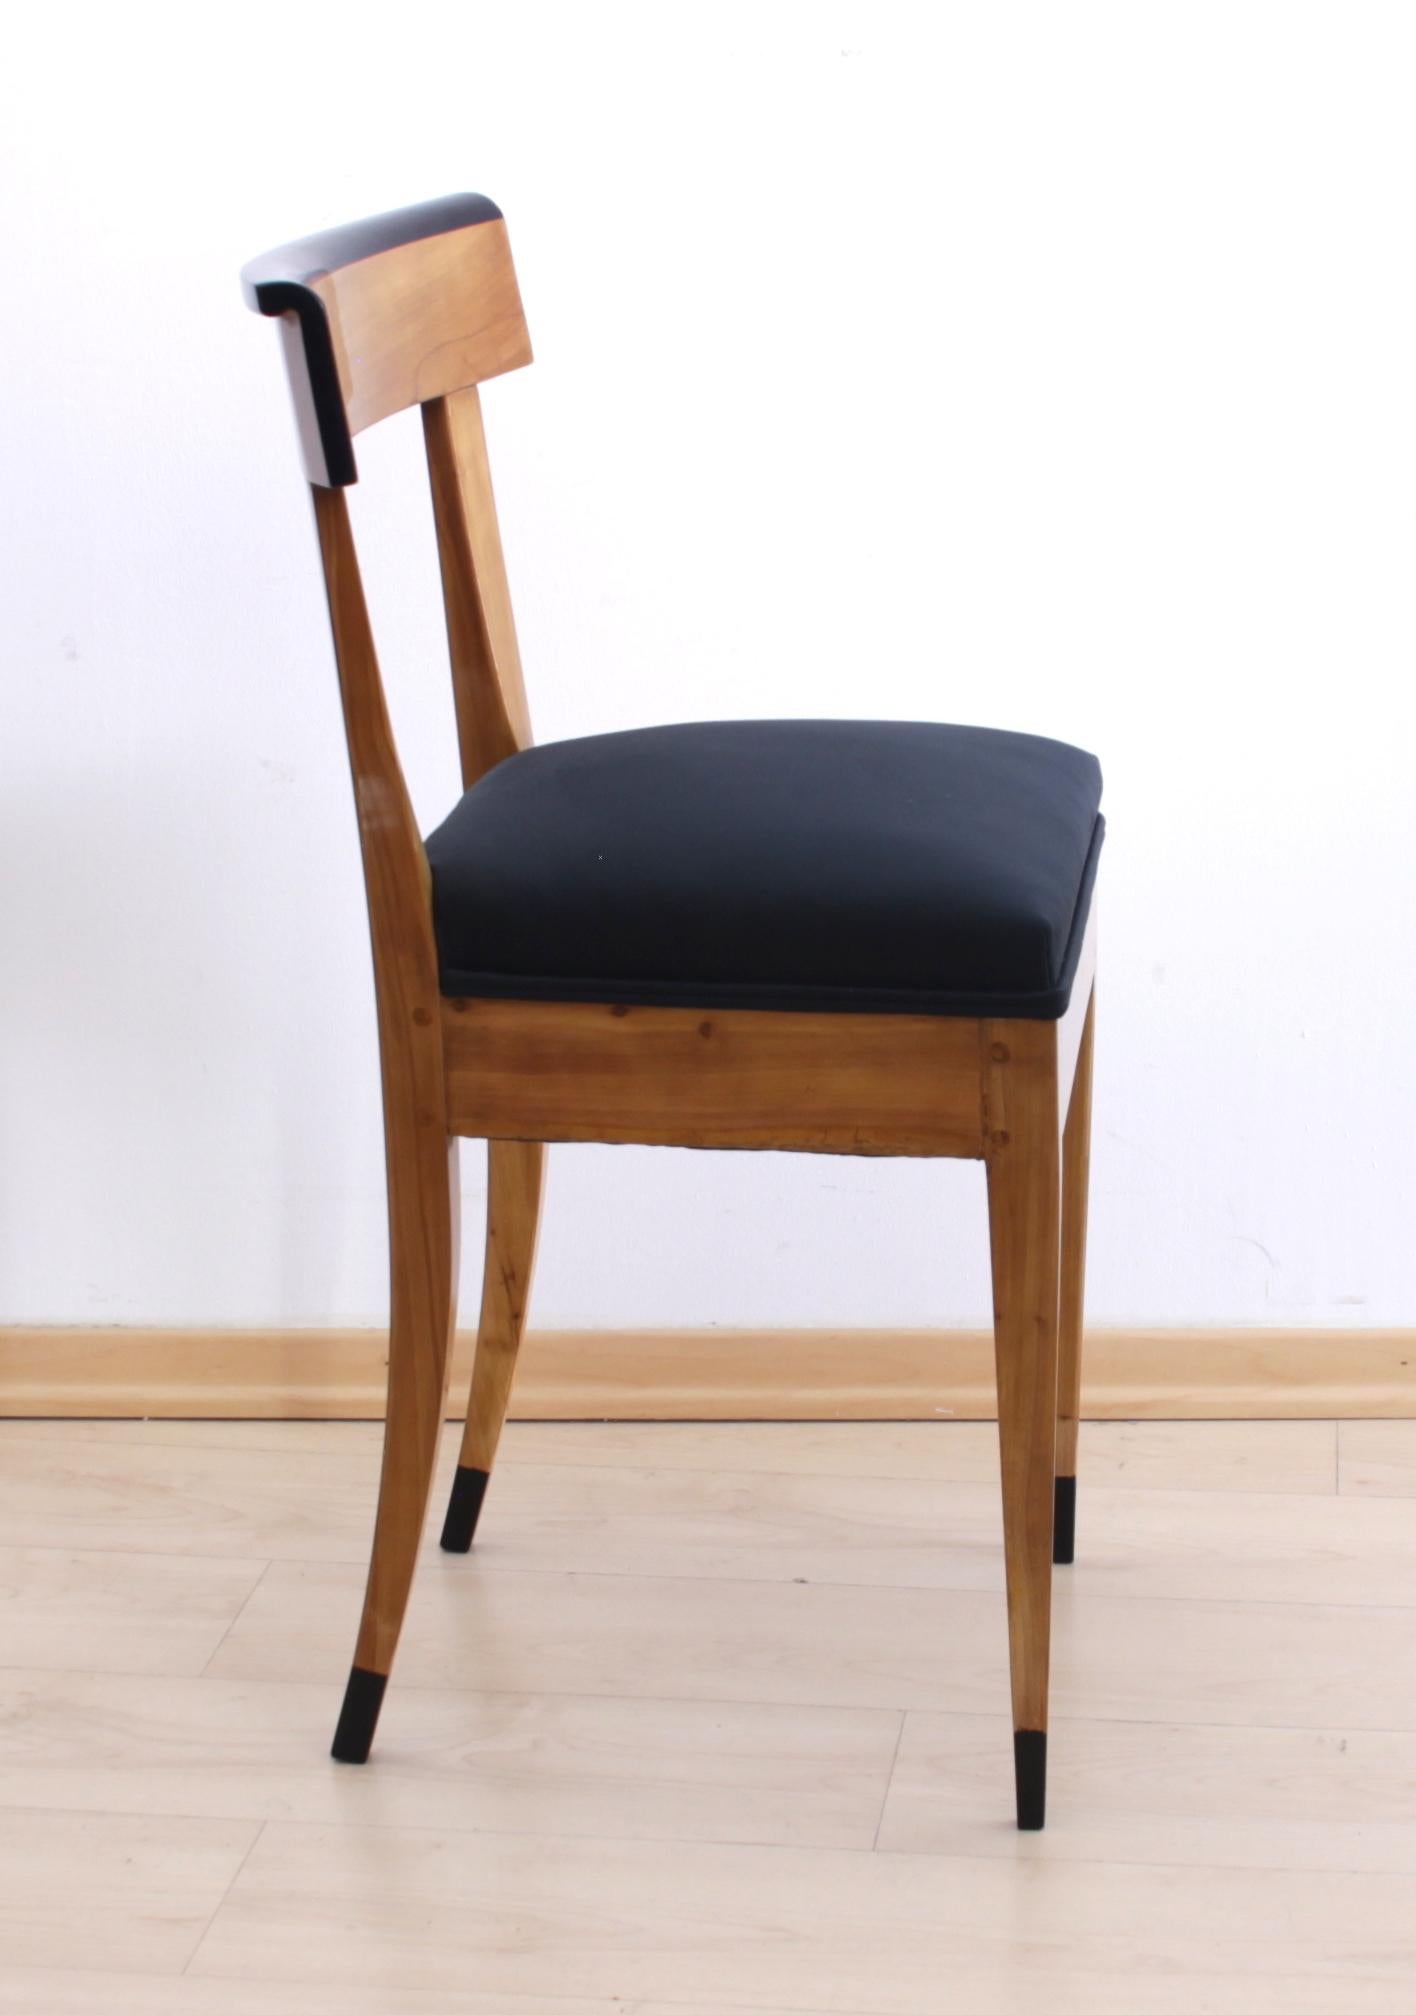 Woodwork Early Biedermeier Chair, Cherry Solid Wood, West Germany, circa 1820